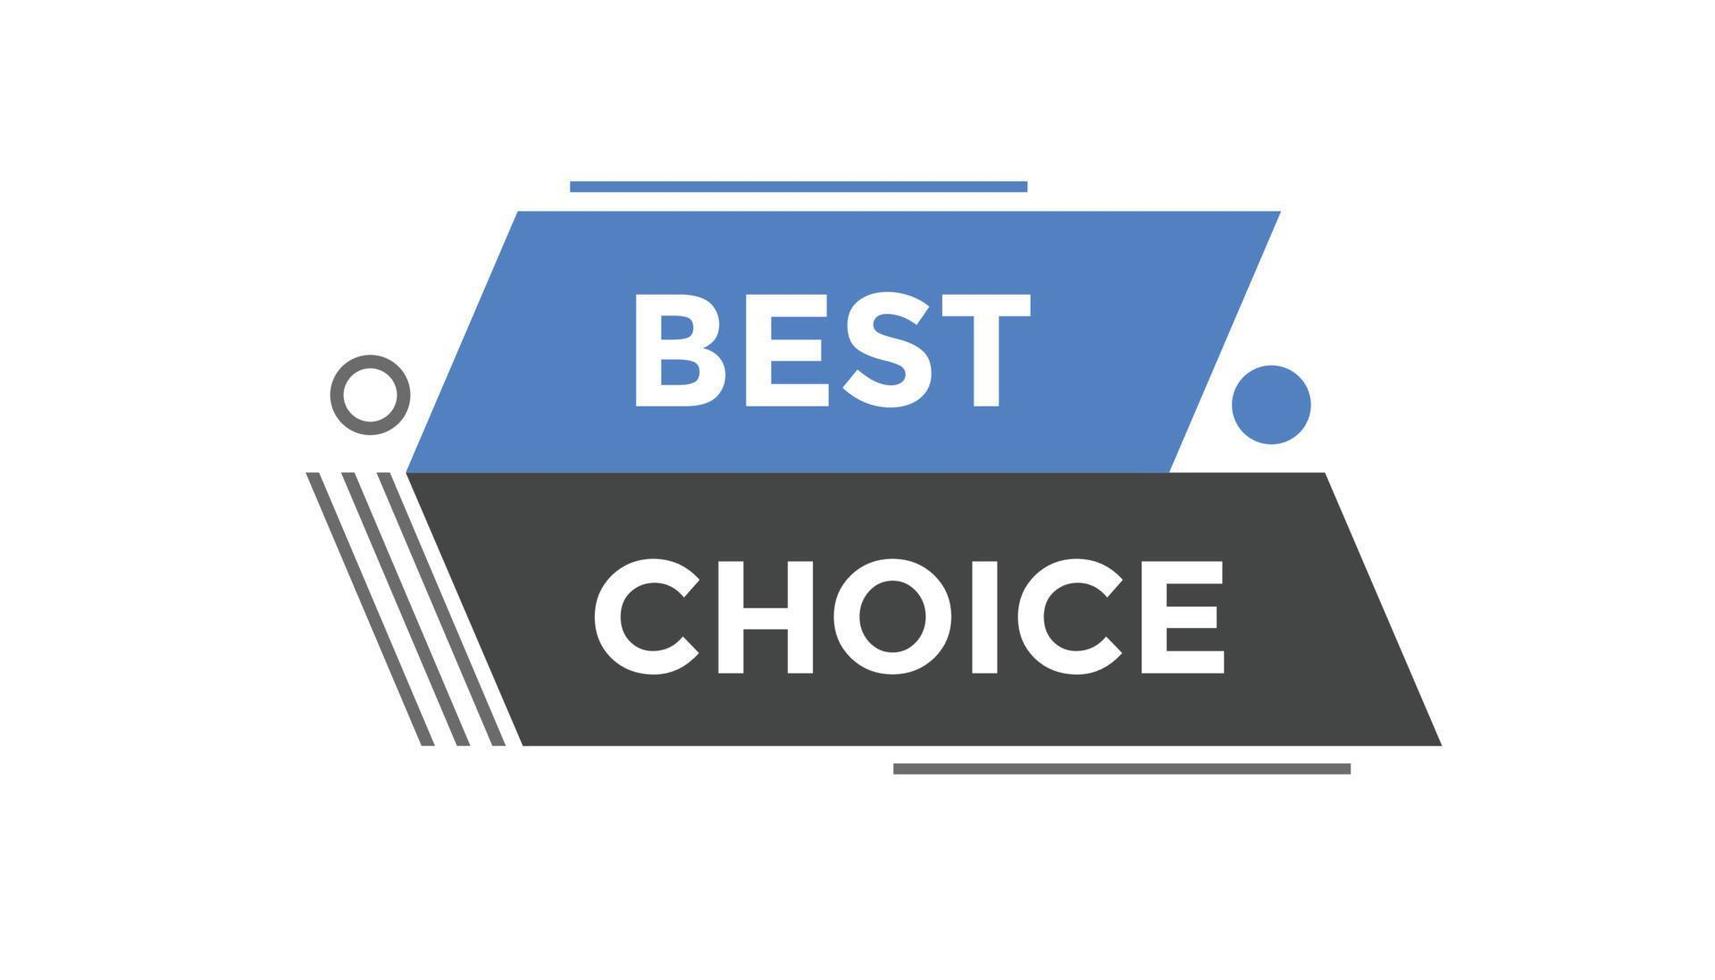 Best choice button web banner templates. Vector Illustration